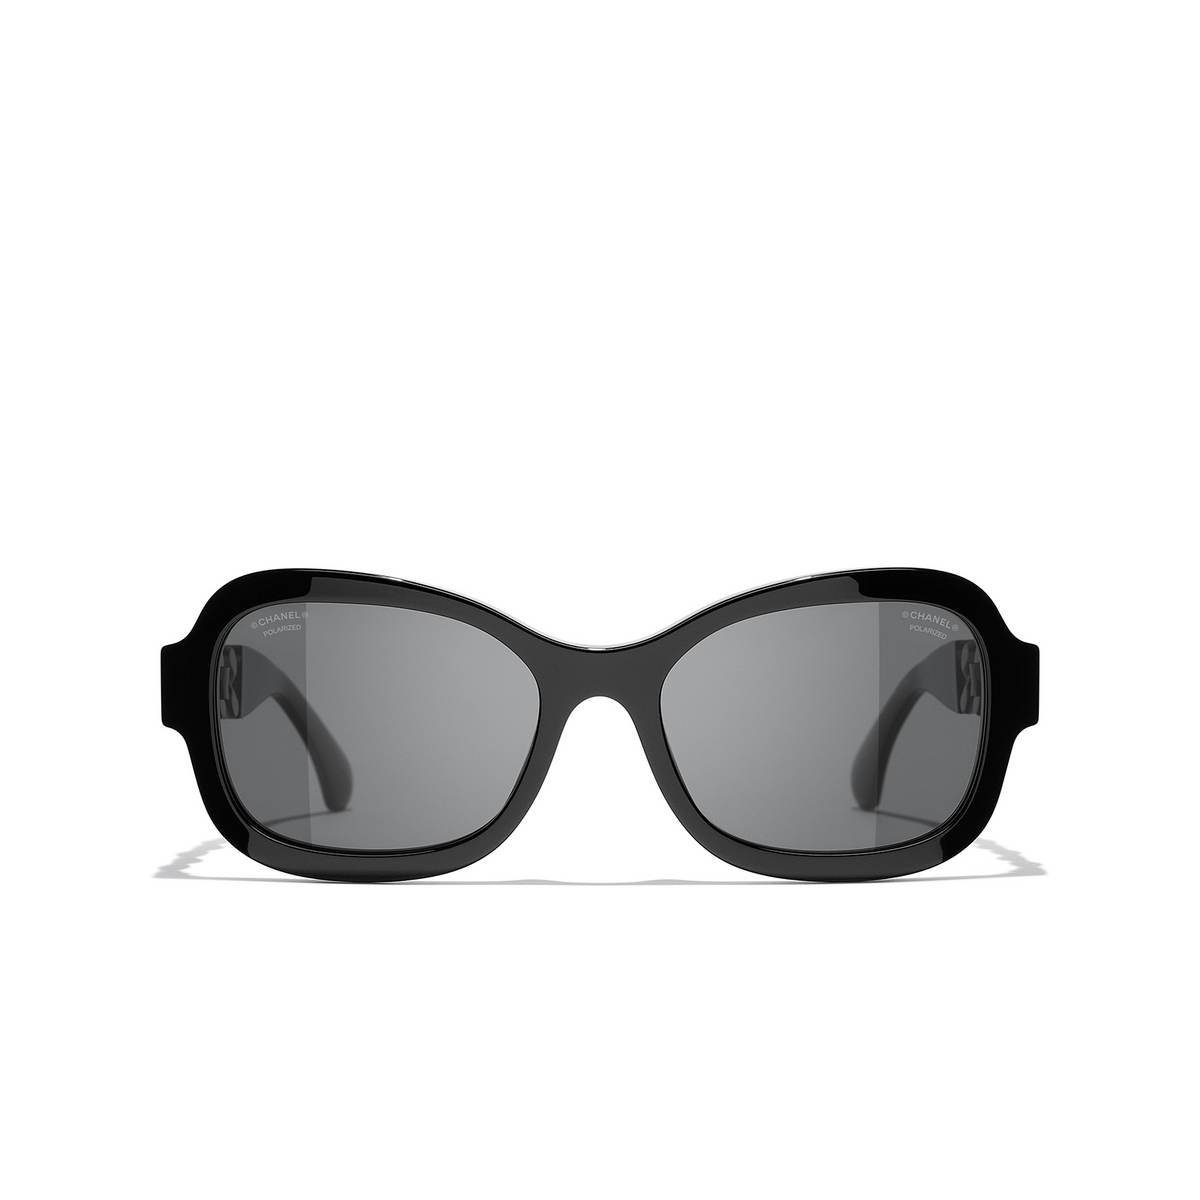 CHANEL rectangle Sunglasses C888T8 Black - front view